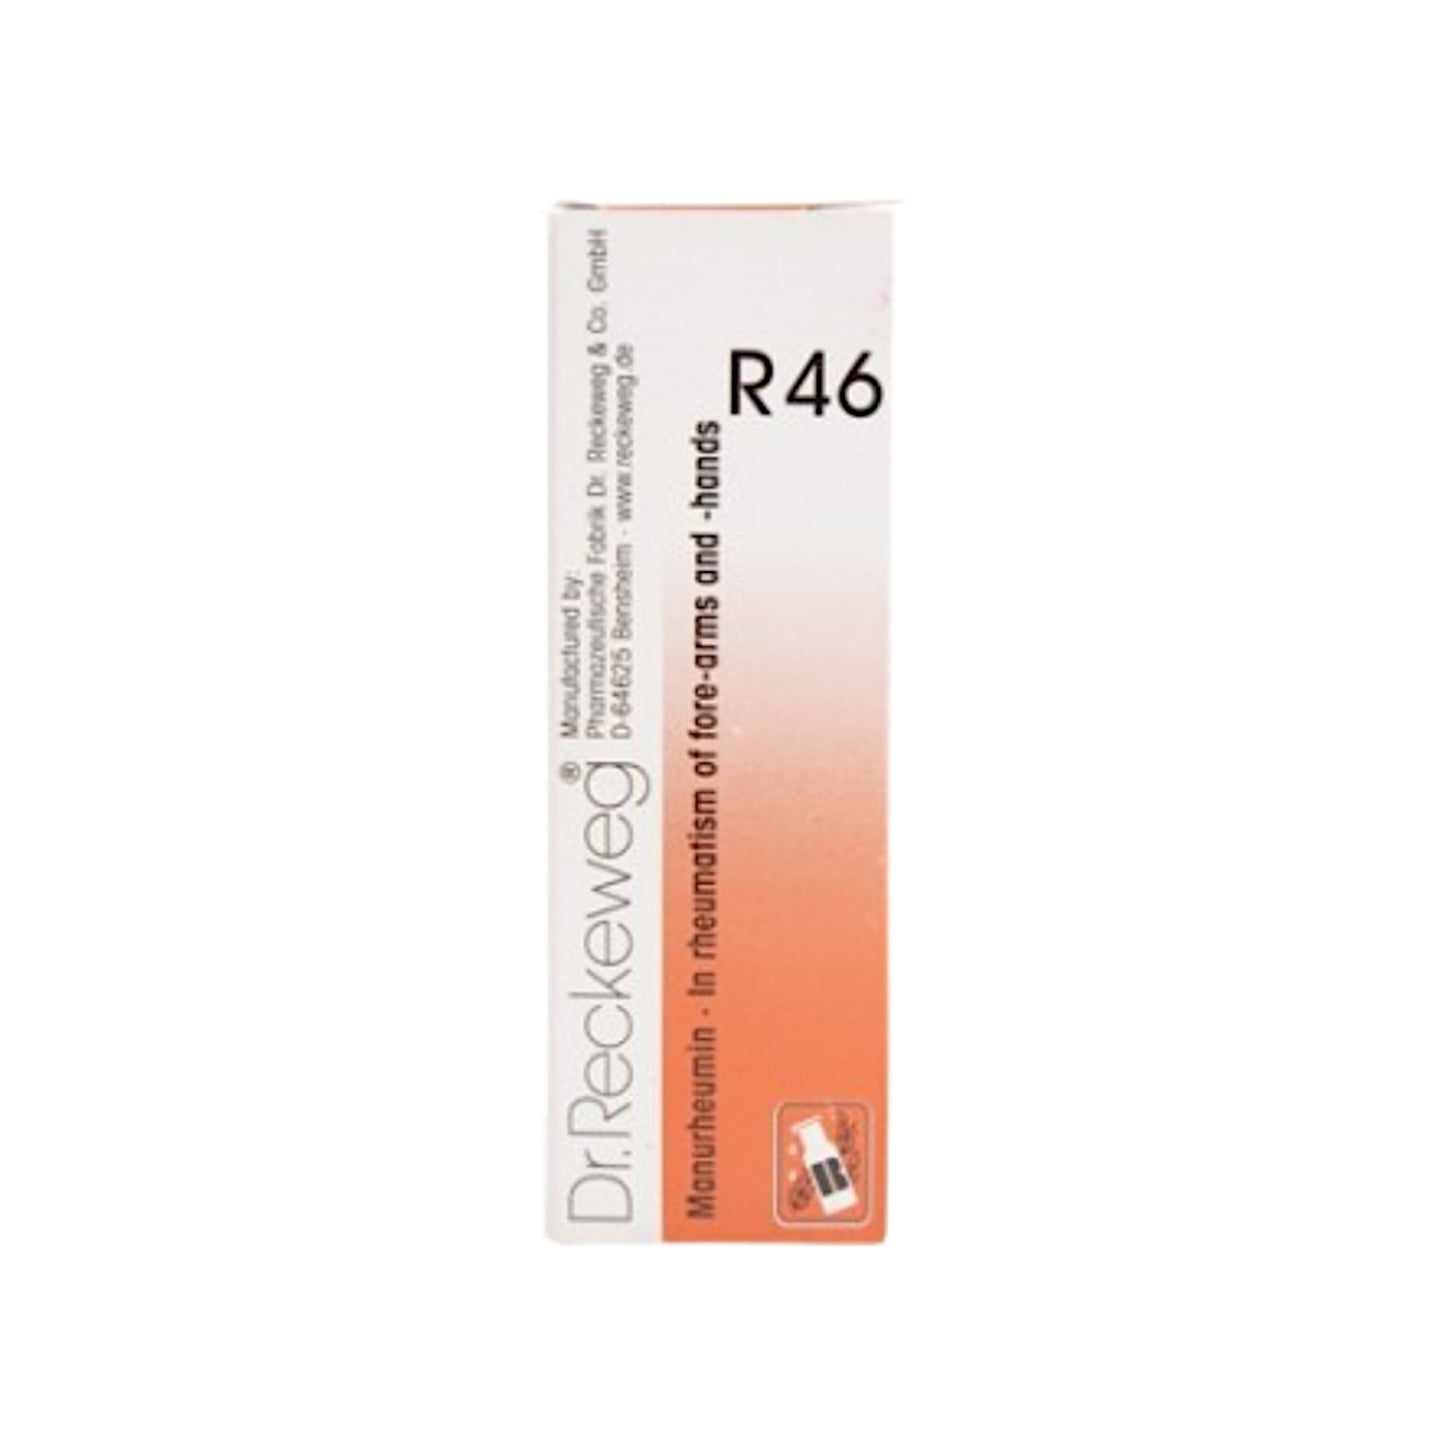 Dr. Reckeweg R46 - Manurheumin Rheumatism Drops 22 ml